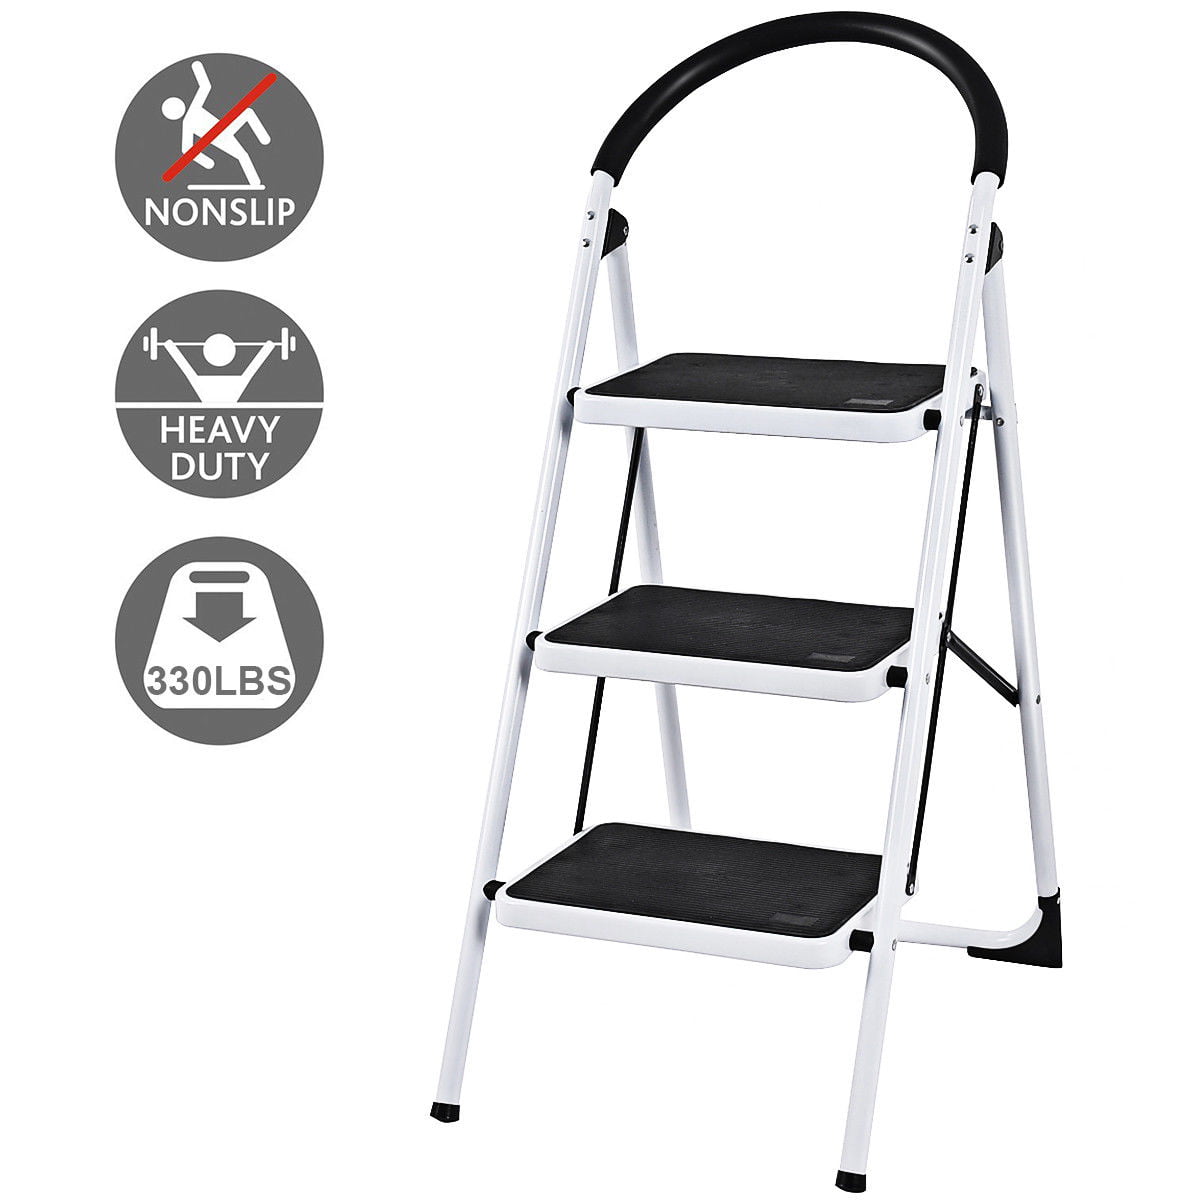 Oshion 3 Step Ladder Platform Folding Stool 330lbs Capacity Non Slip Safety Tread Space Saving Industrial Home Use